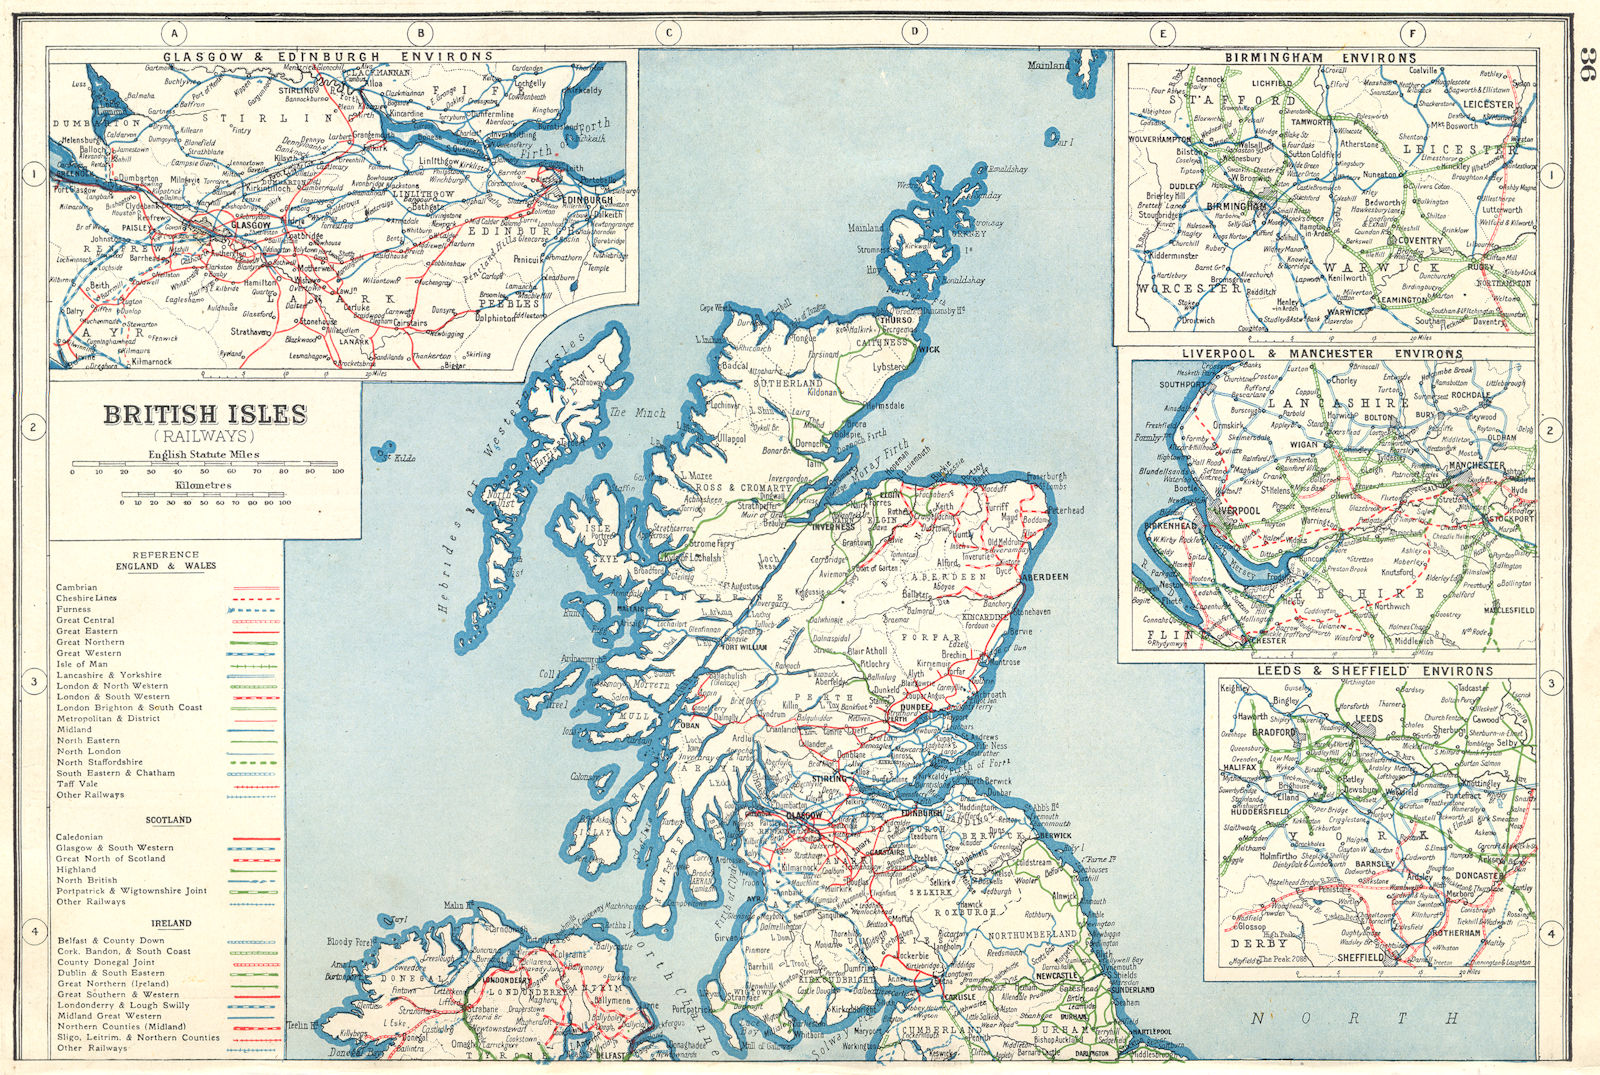 BRITISH RAILWAYS. Rail companies. Scotland Birmingham NW England 1920 old map